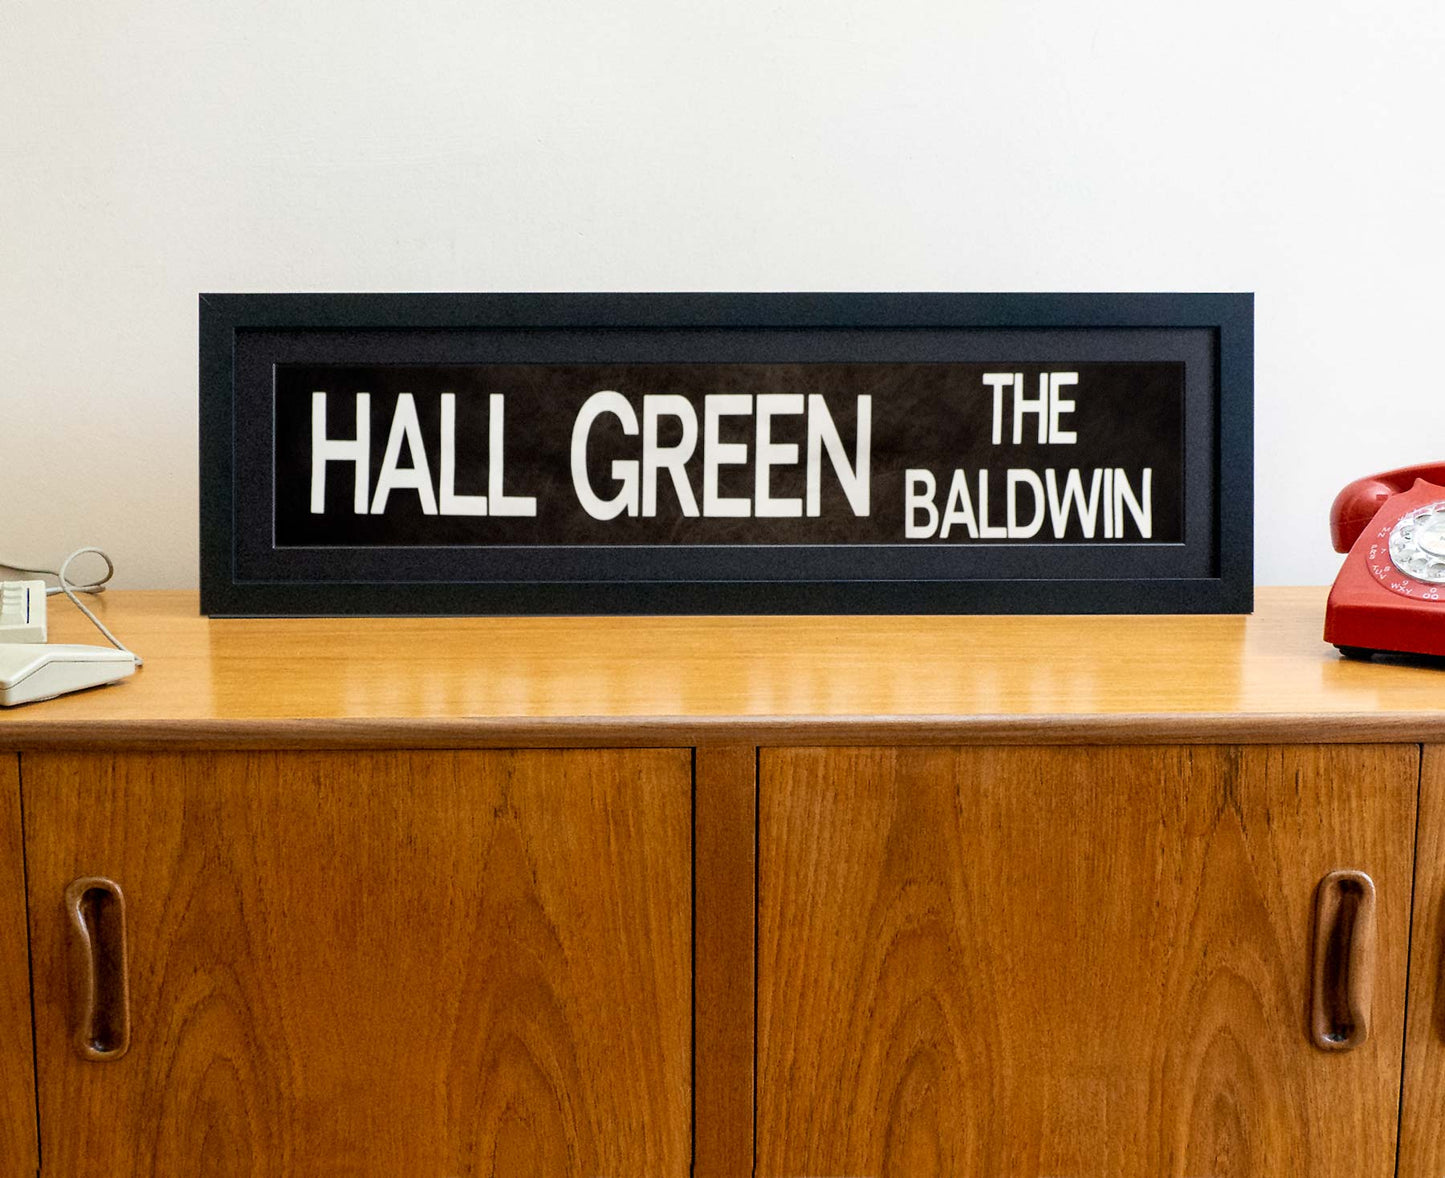 Hall Green The Baldwin 1990s framed original bus blind